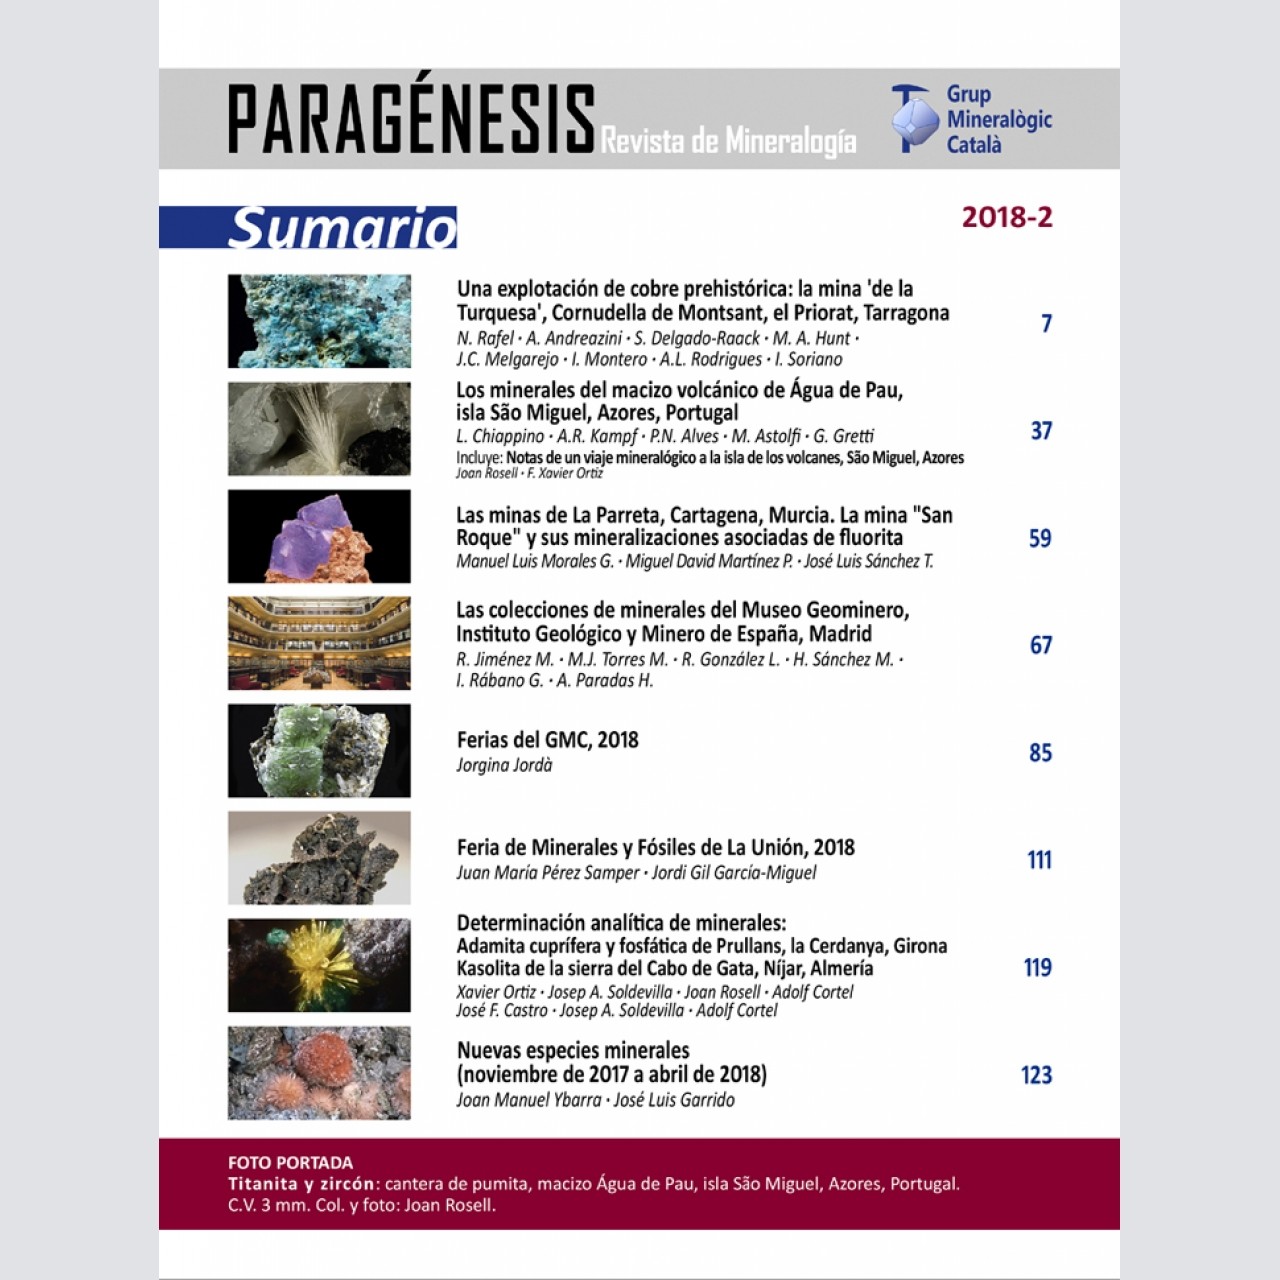 Paragénesis. Revista de Mineralogía (2018-2)